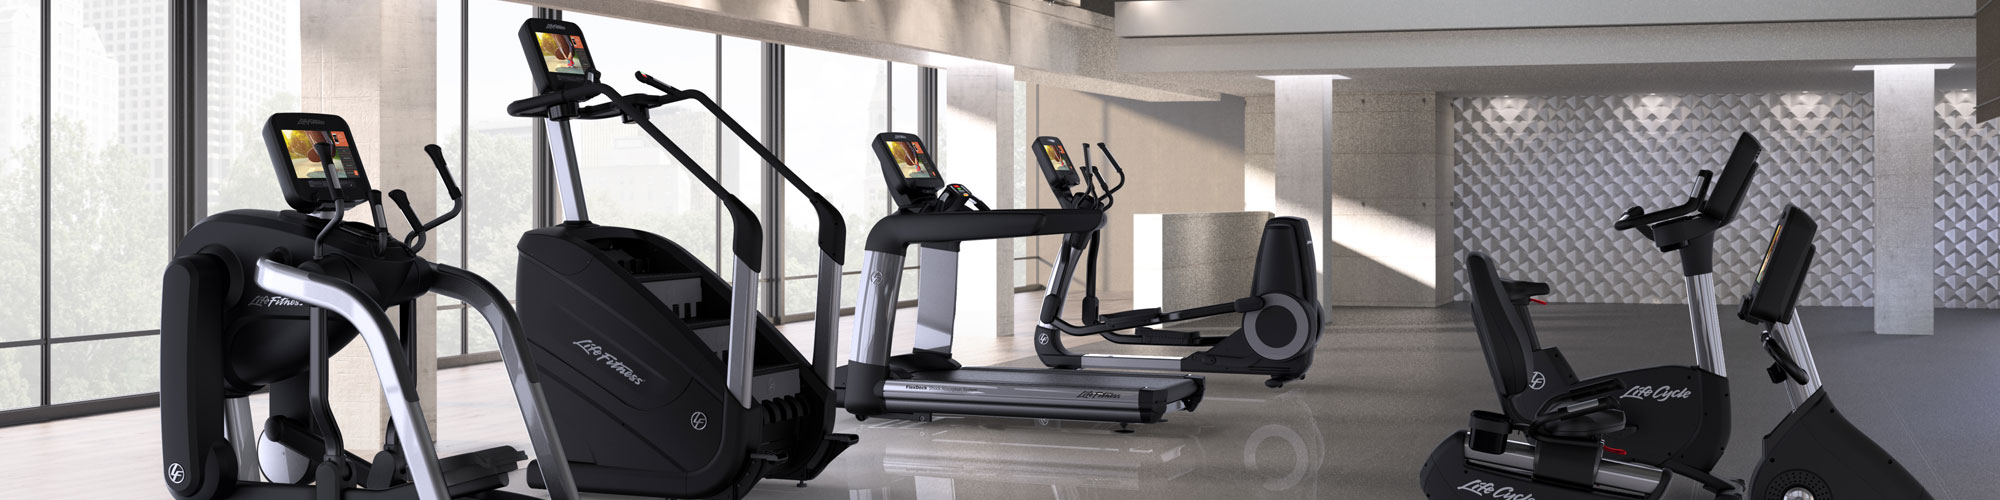 Treadmill, cross trainer, exercise bike and stepper